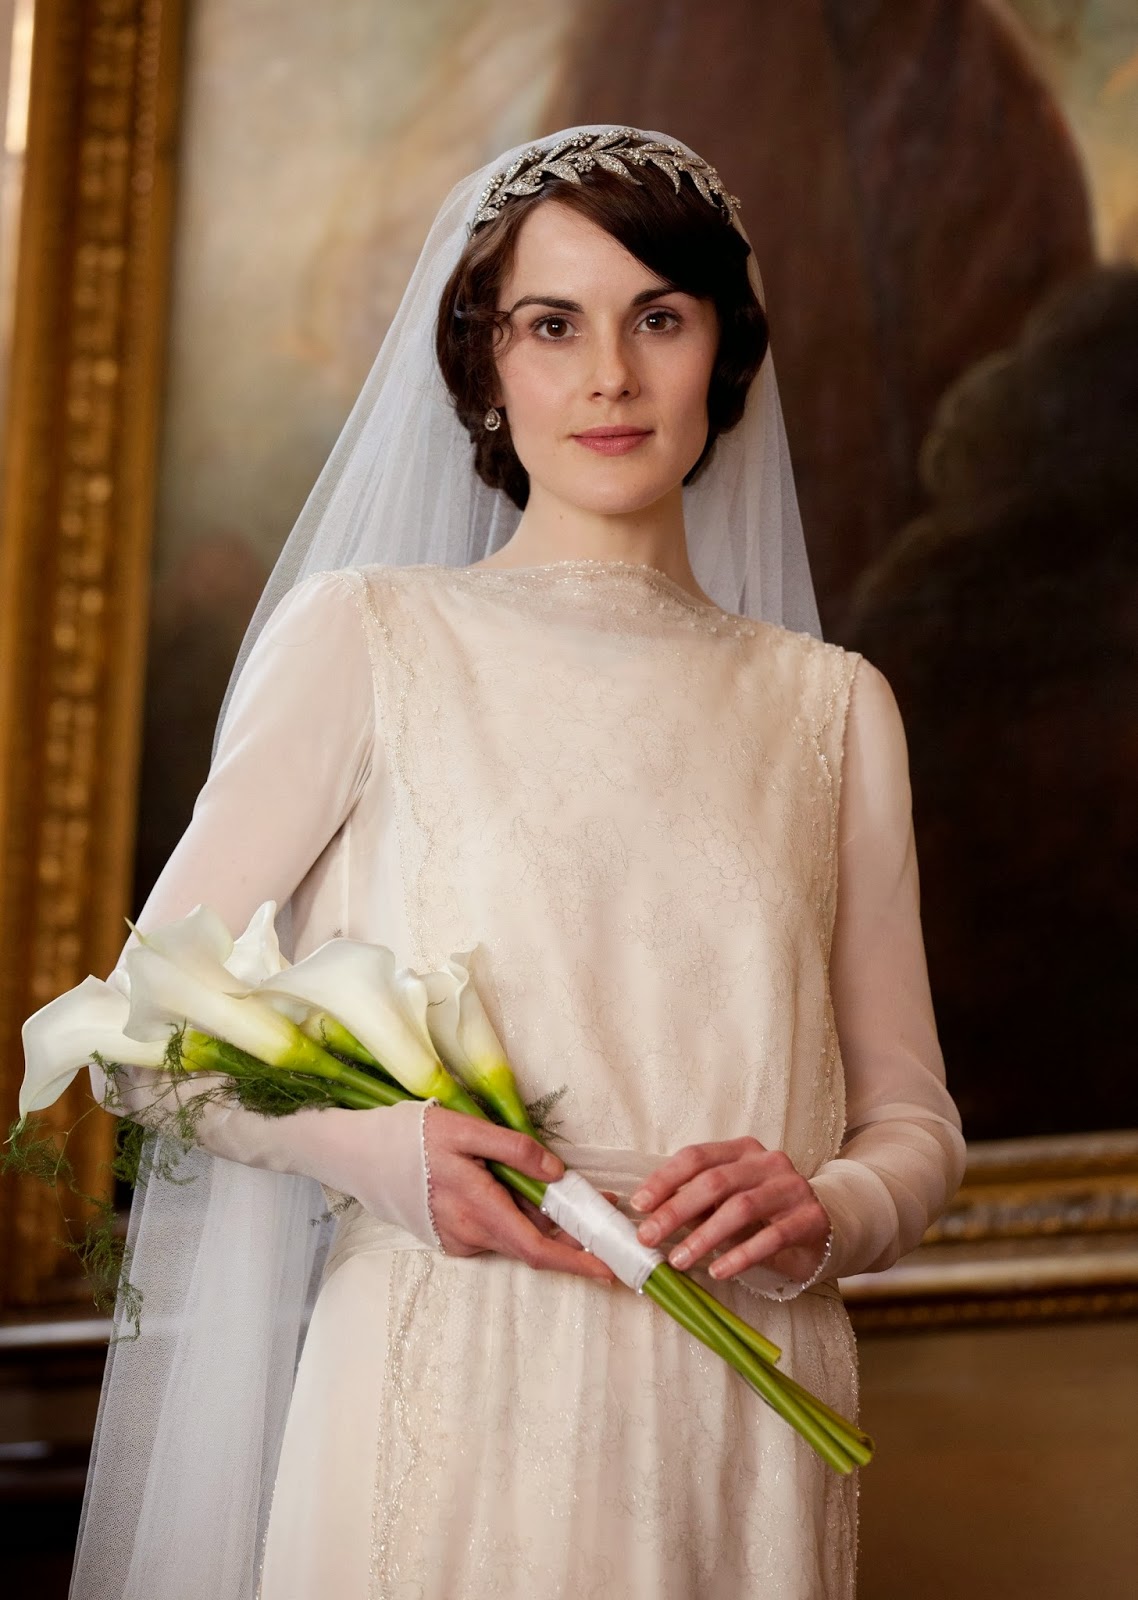 Wedding inspiration | Downton Abbey’s Wedding | Cool Chic Style Fashion